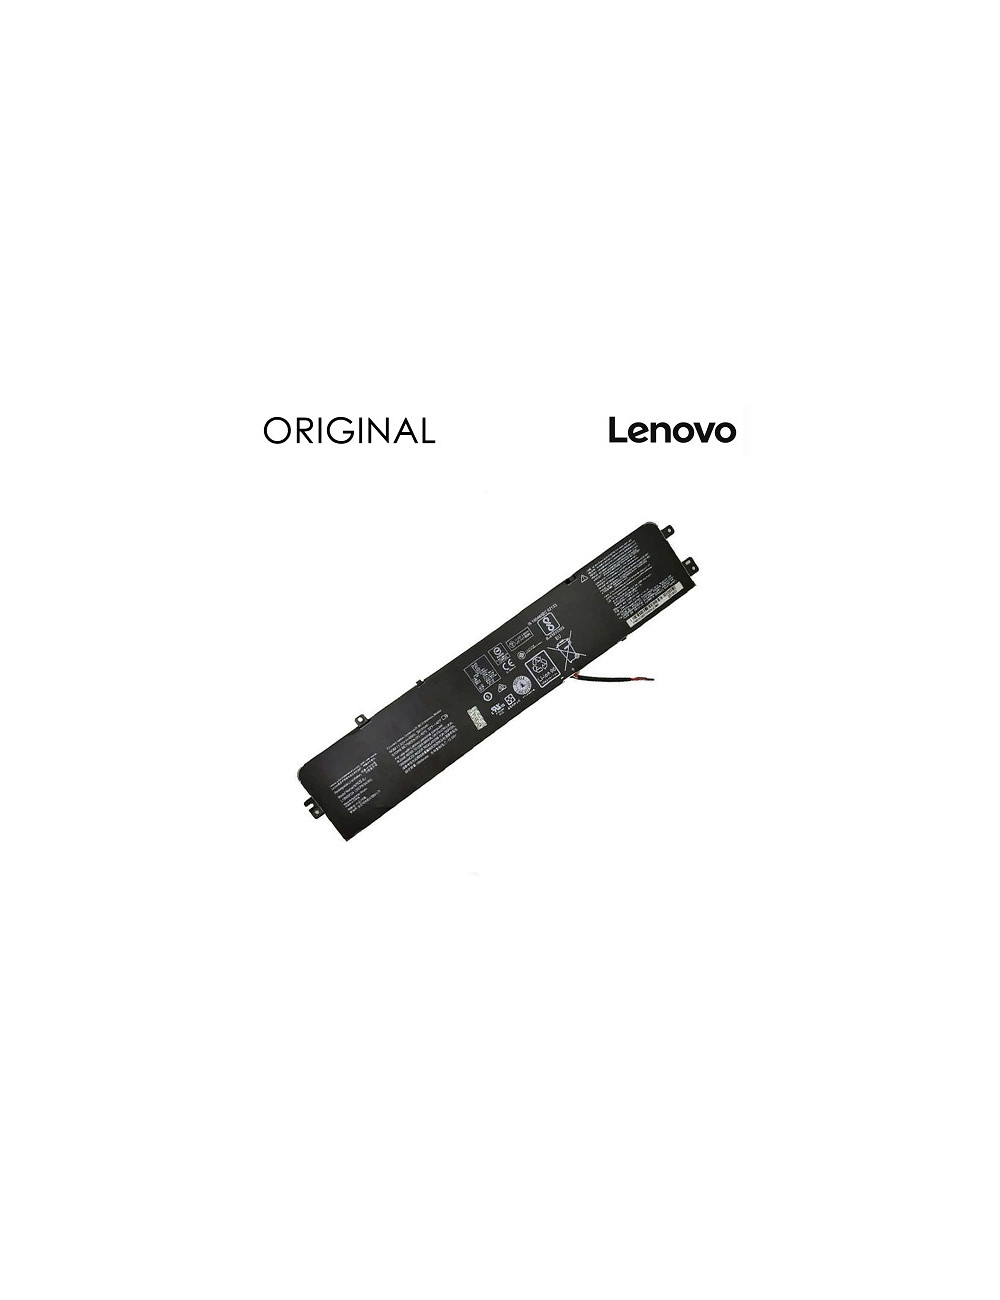 Notebook baterija, Lenovo L14S3P24 Original